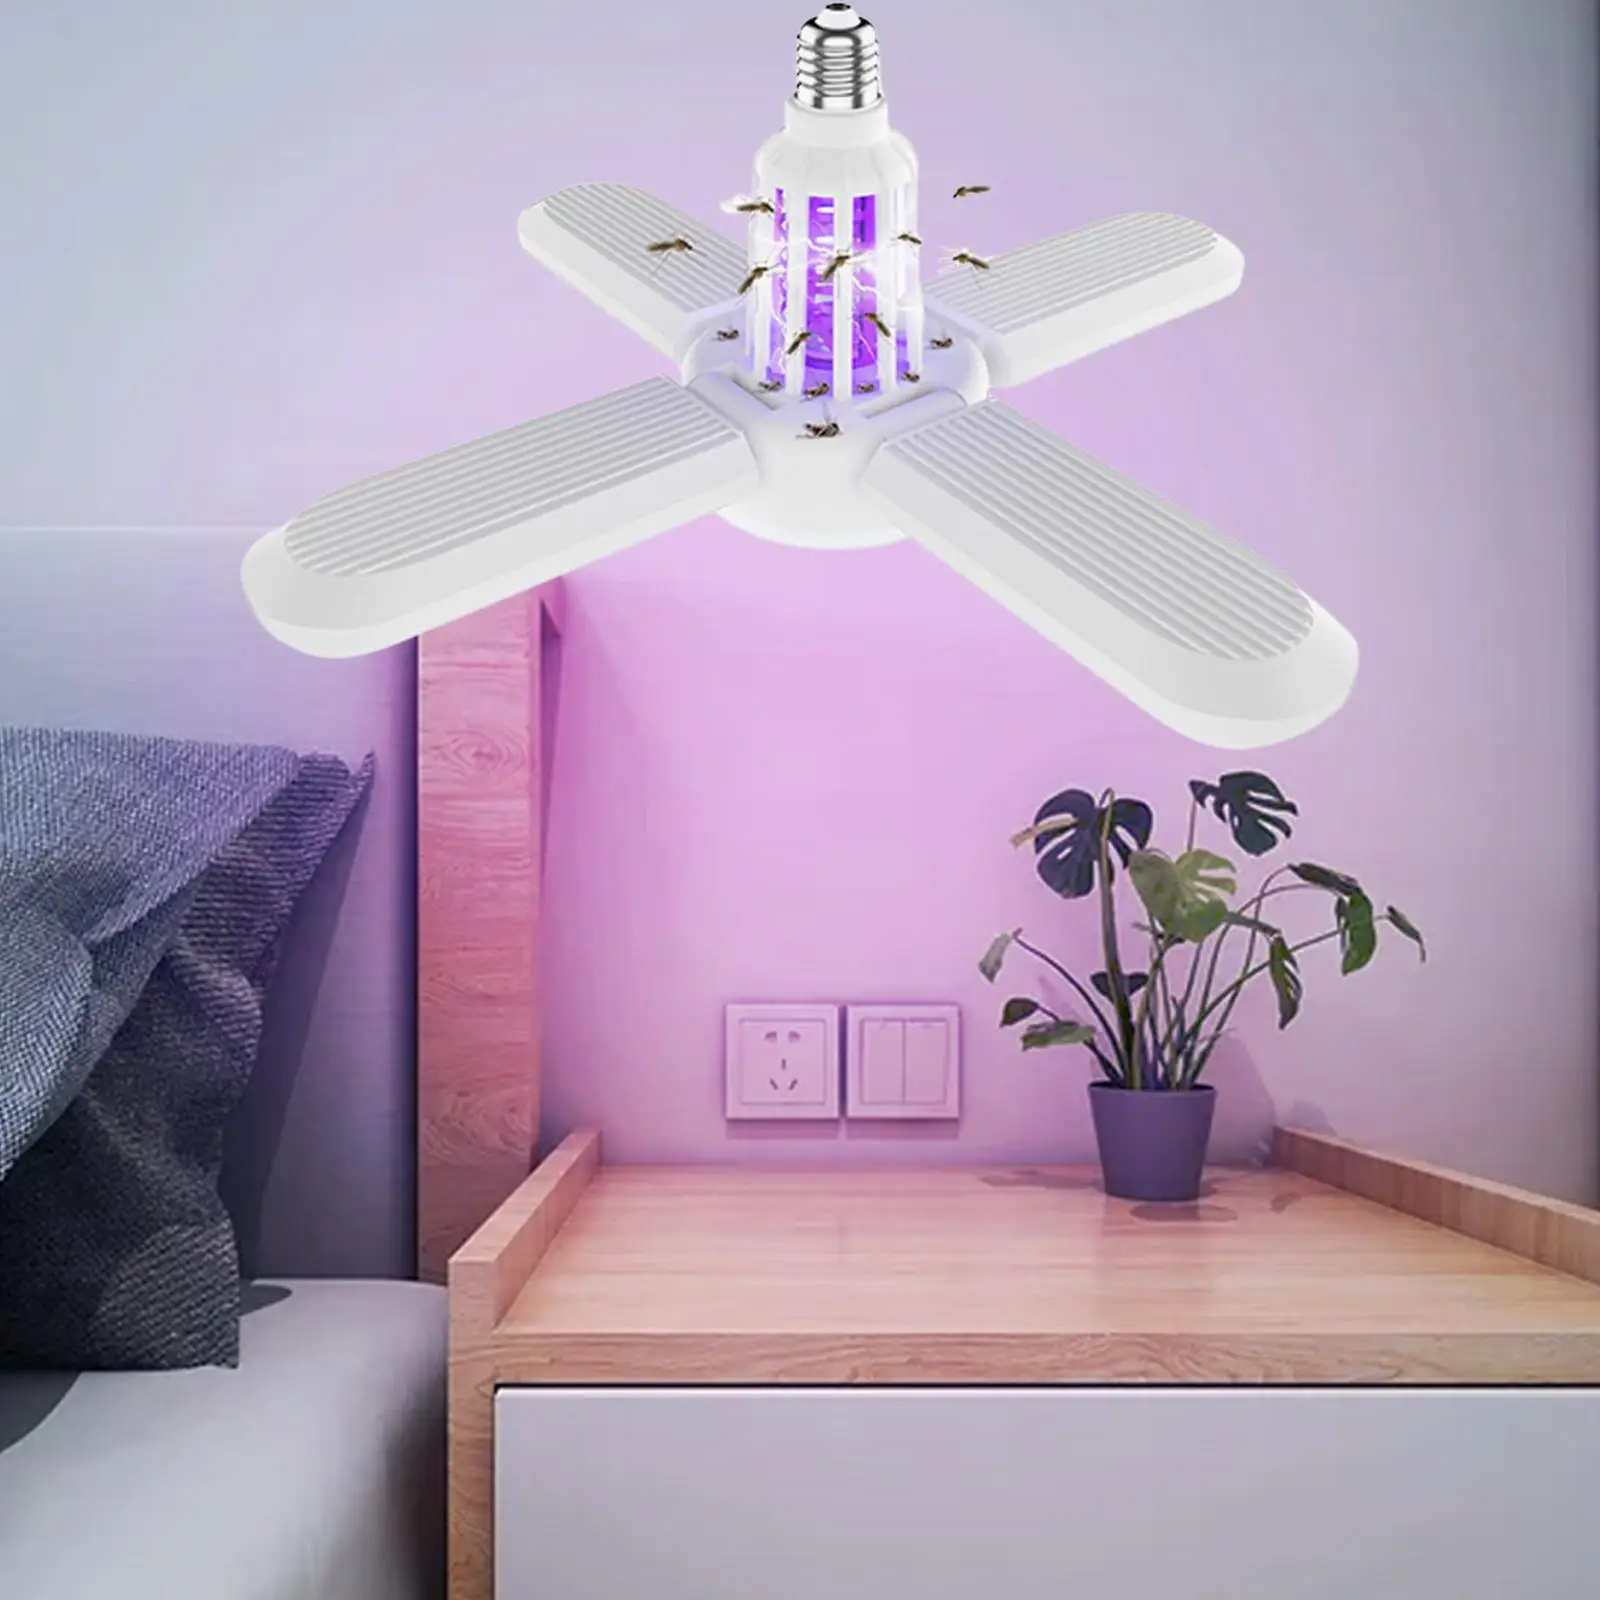 LED Mosquito Light Bulb Folding E27 Base Convenient Assemble Illumination Accessories White for Workbench Porch Basement